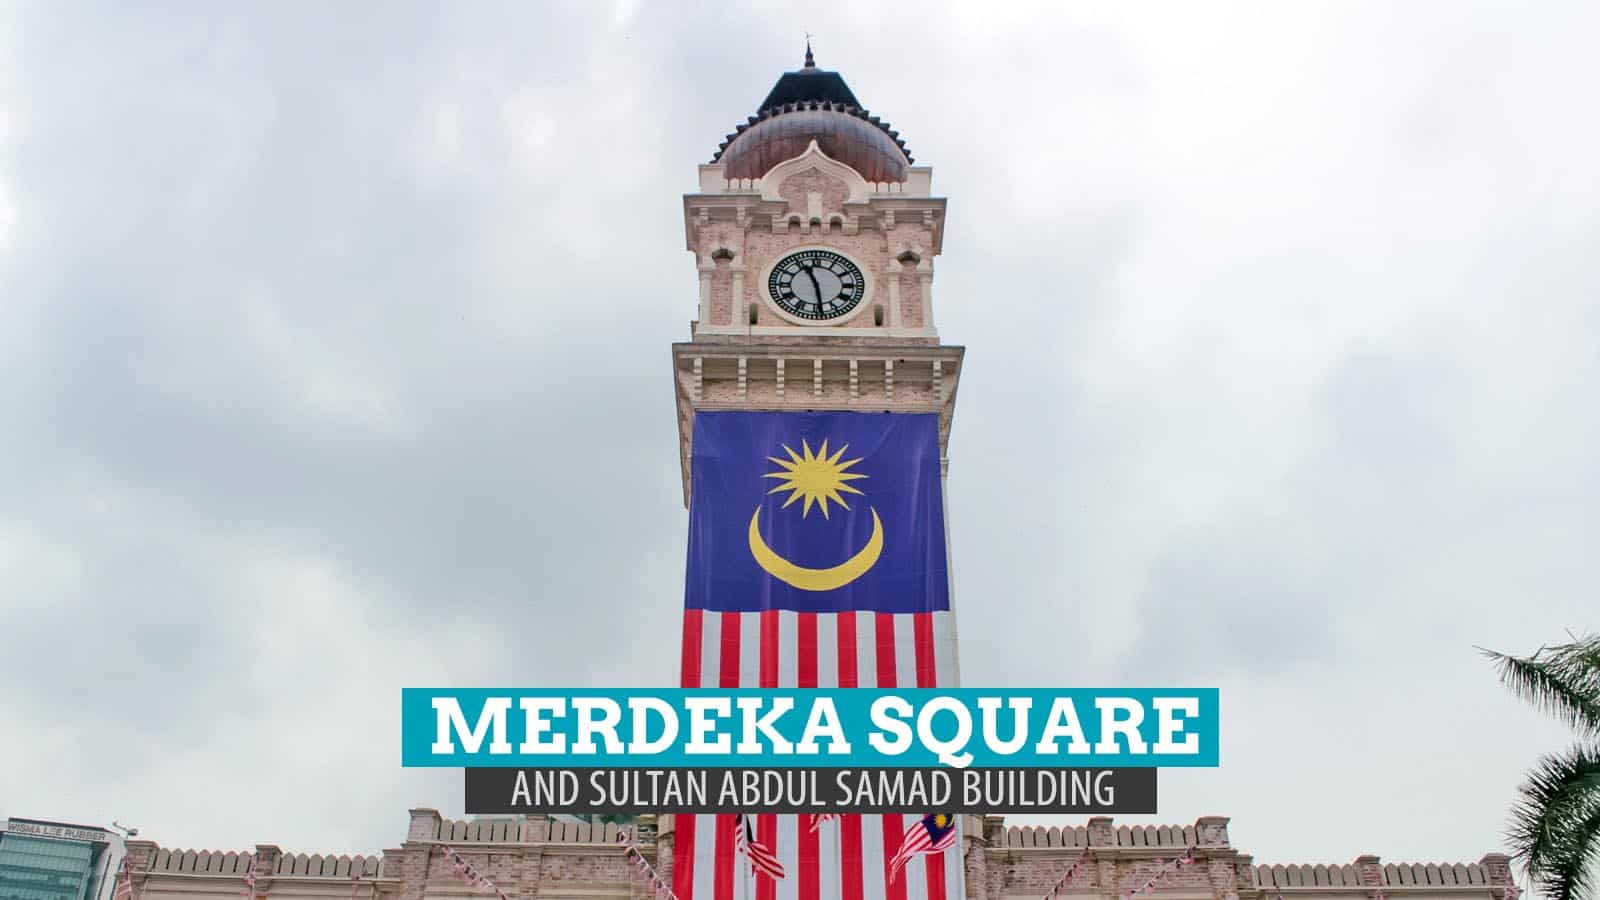 MERDEKA SQUARE and SULTAN ABDUL SAMAD BUILDING in Kuala Lumpur, Malaysia